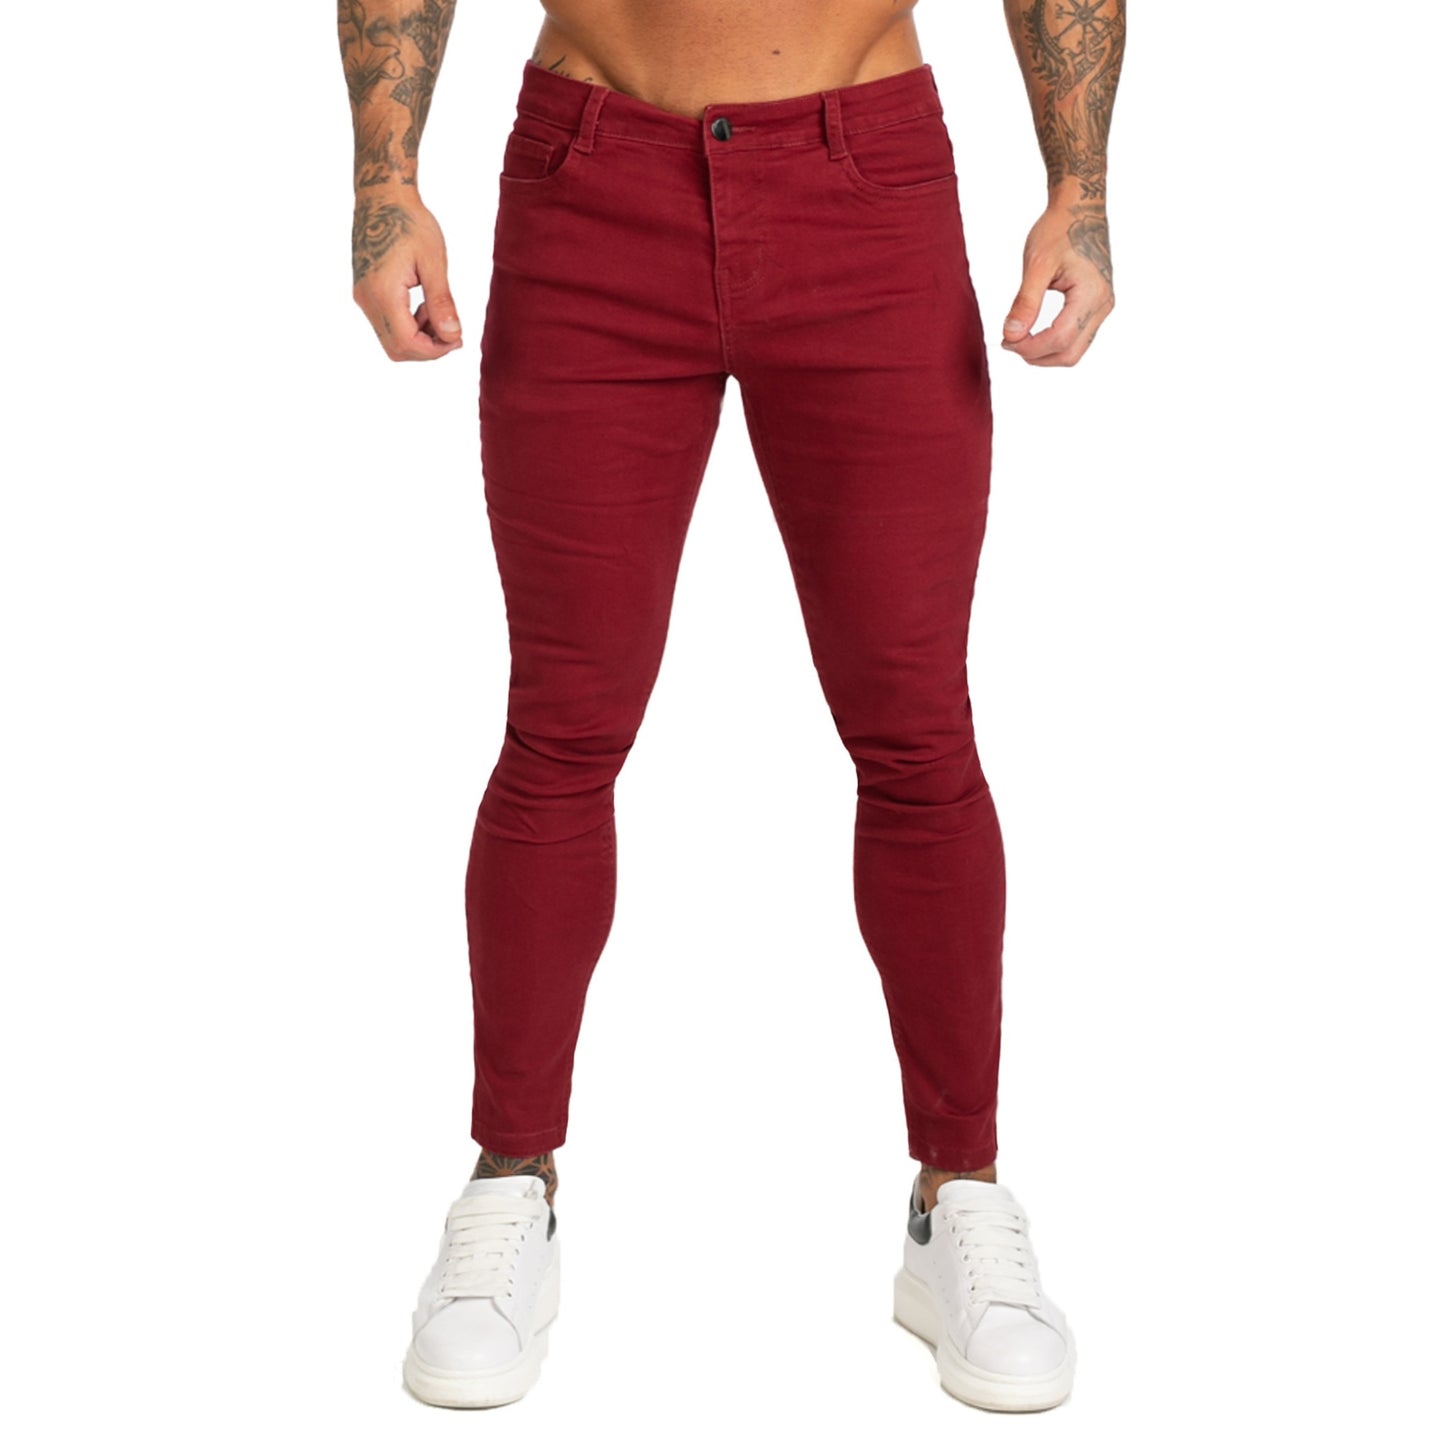 Red super skinny fit jeans Z173